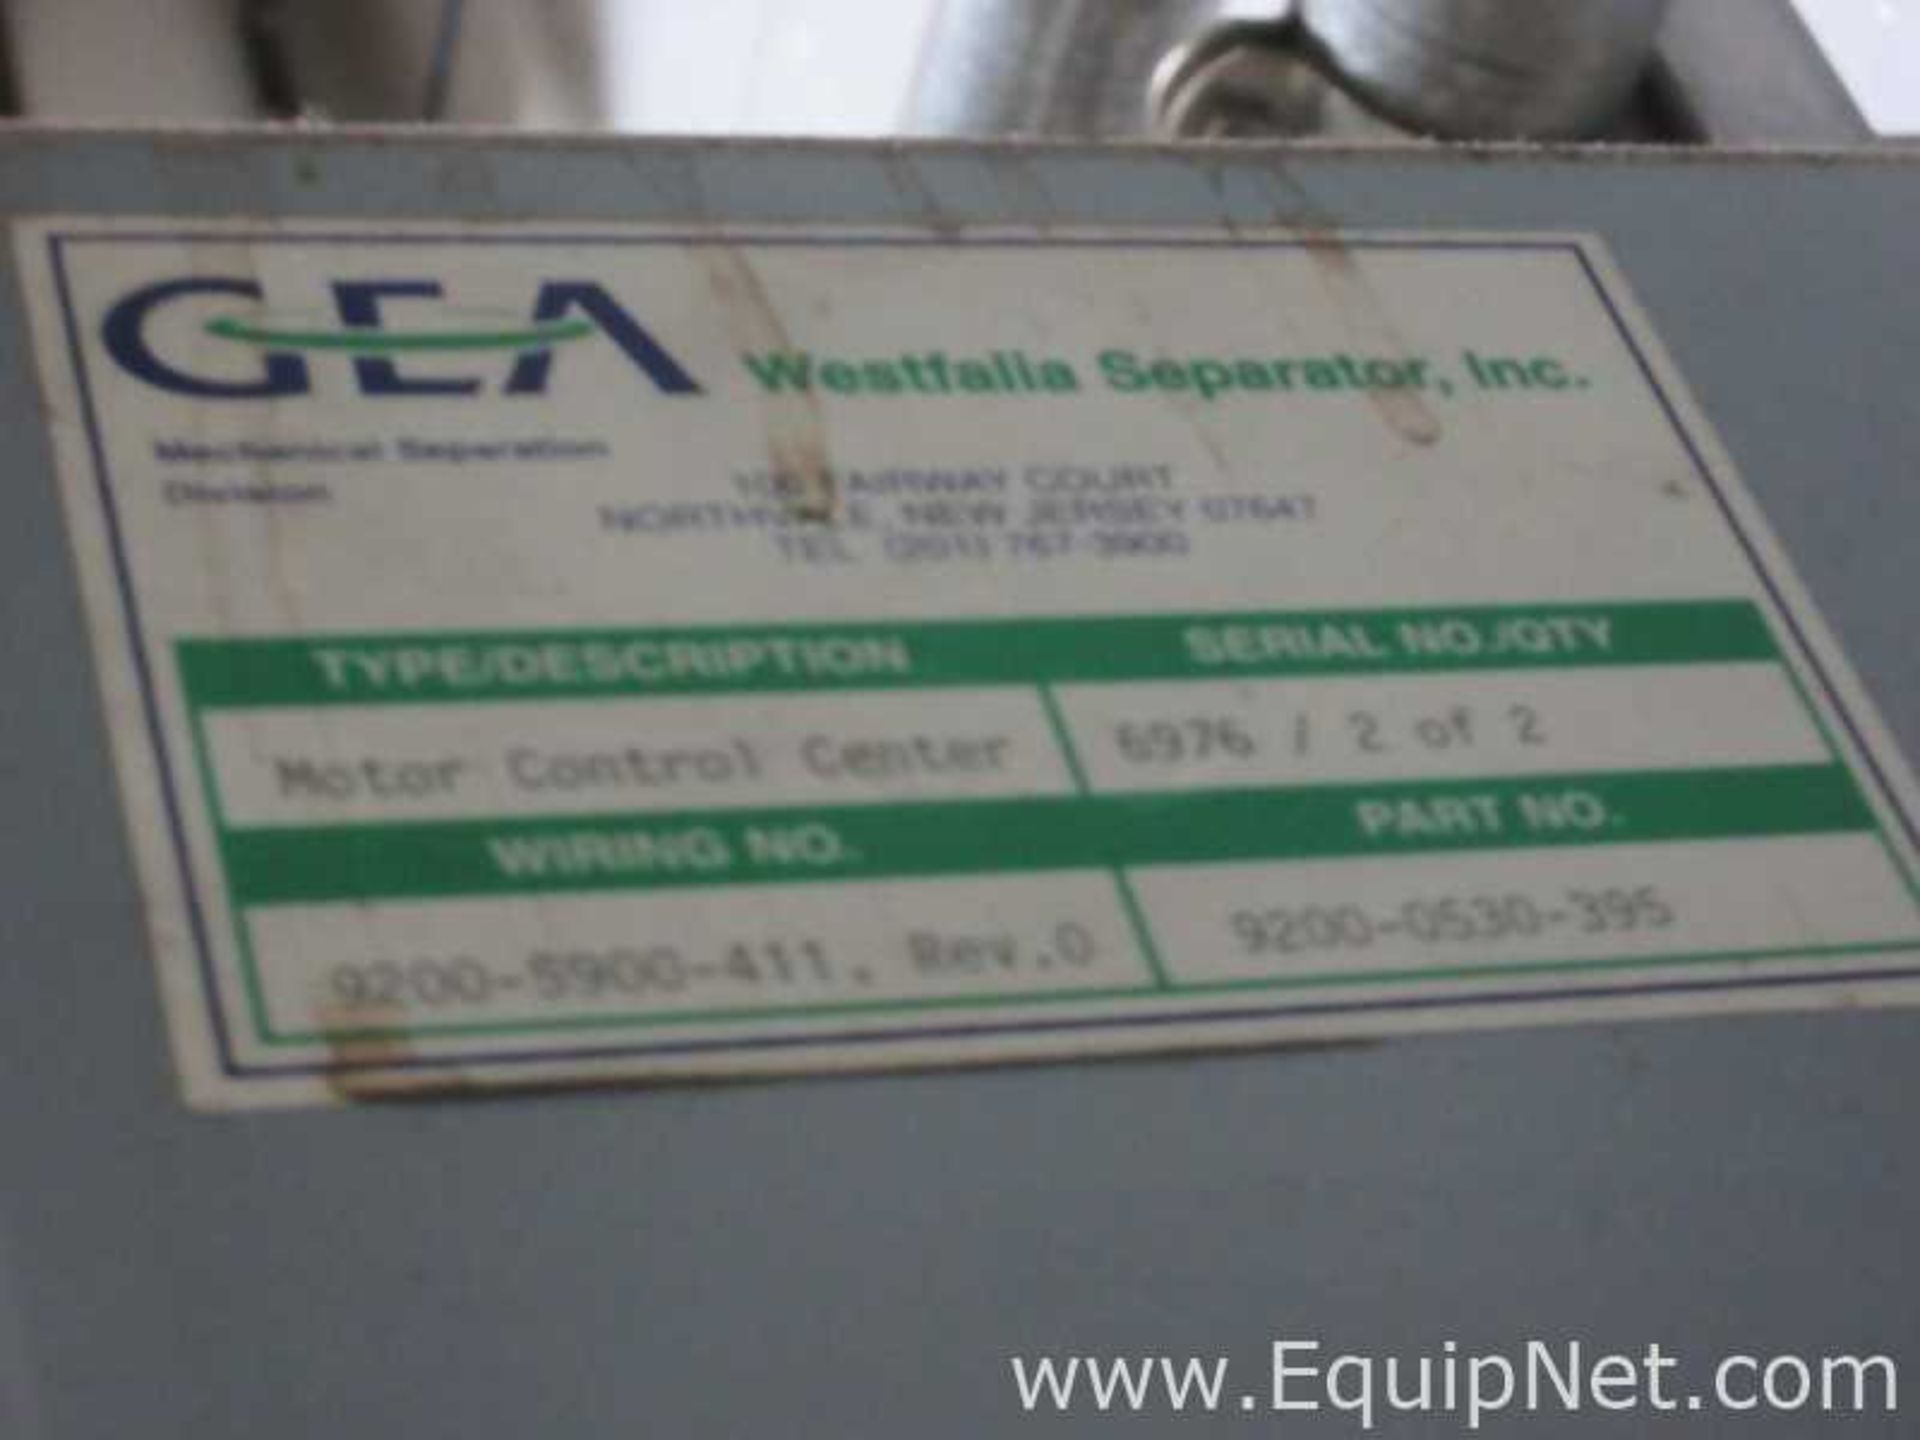 GEA Westfalia Separator Group GMASTER CF 4000 Stainless Steel Decanter Centrifuge - Image 26 of 44